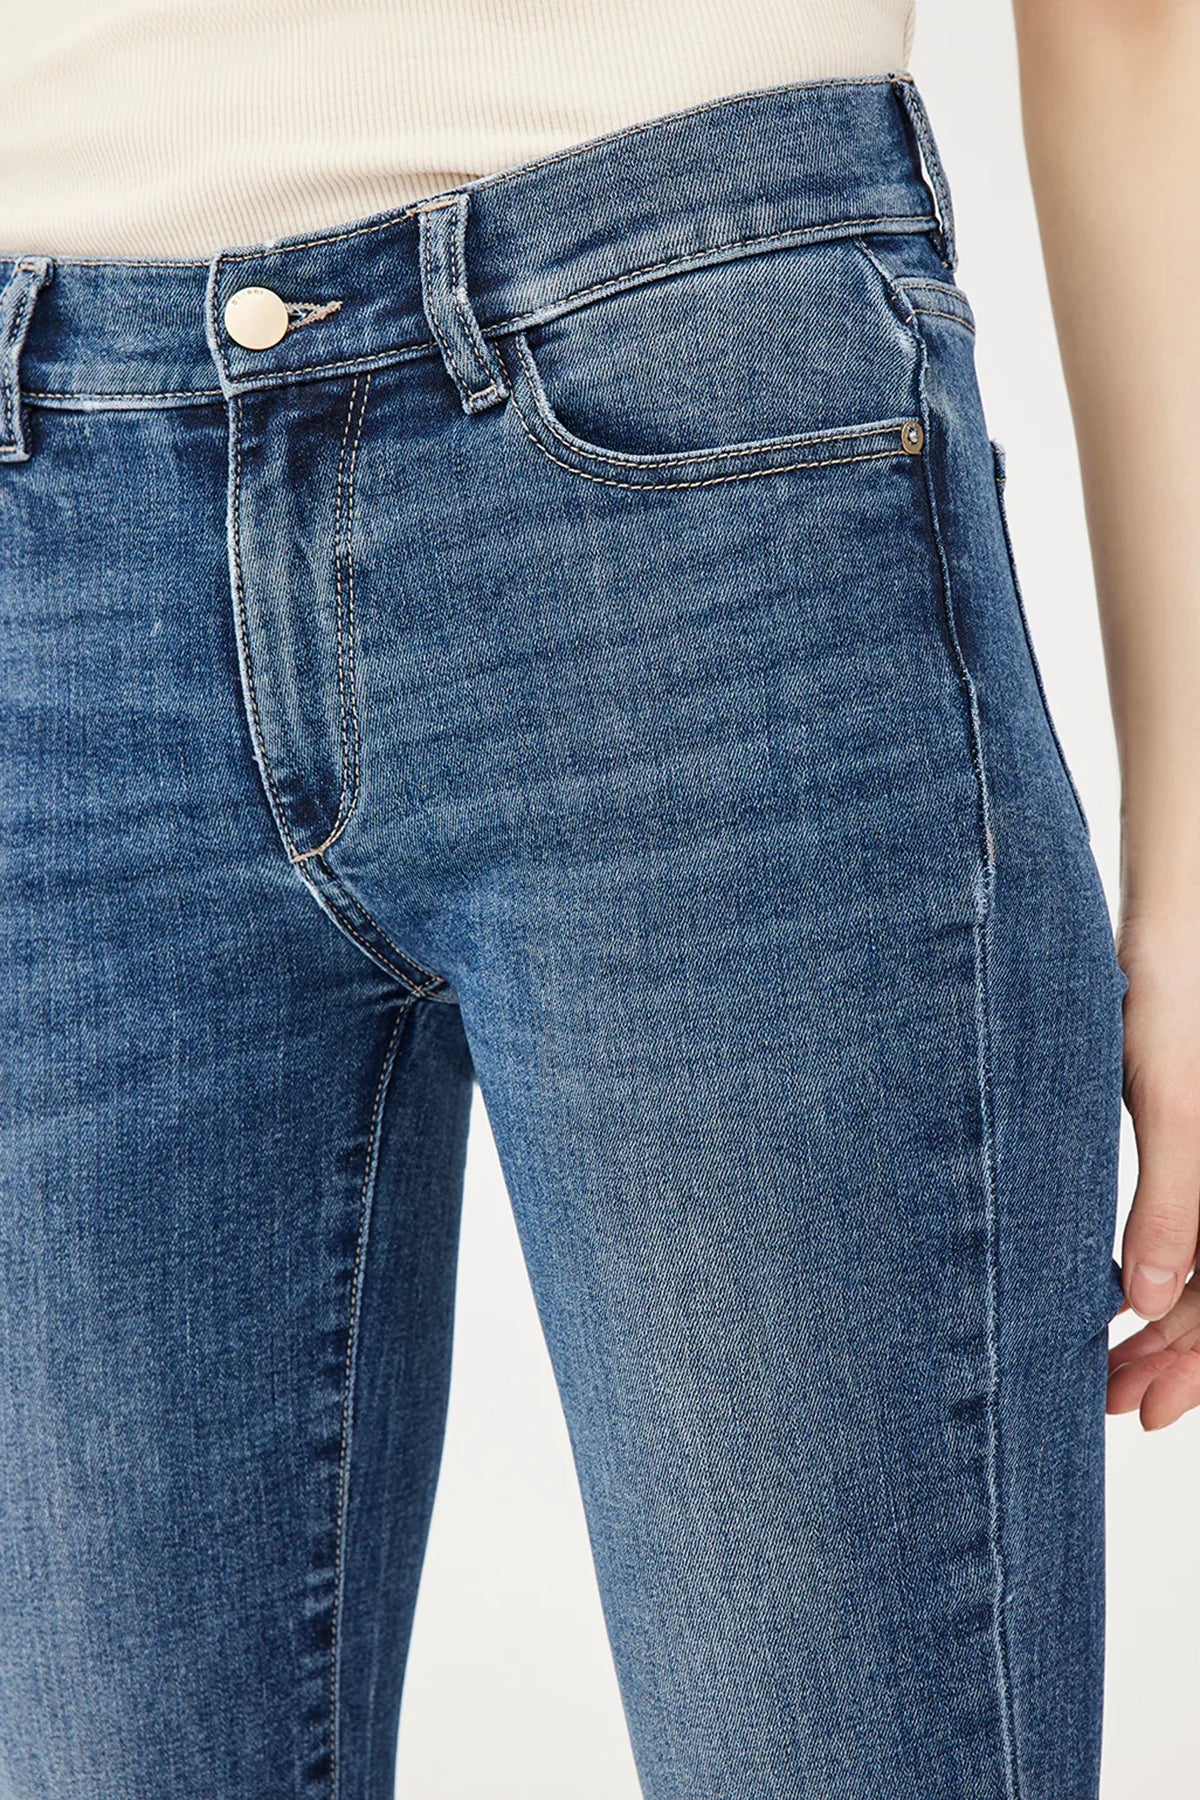 DL1961 Mara Straight Jeans